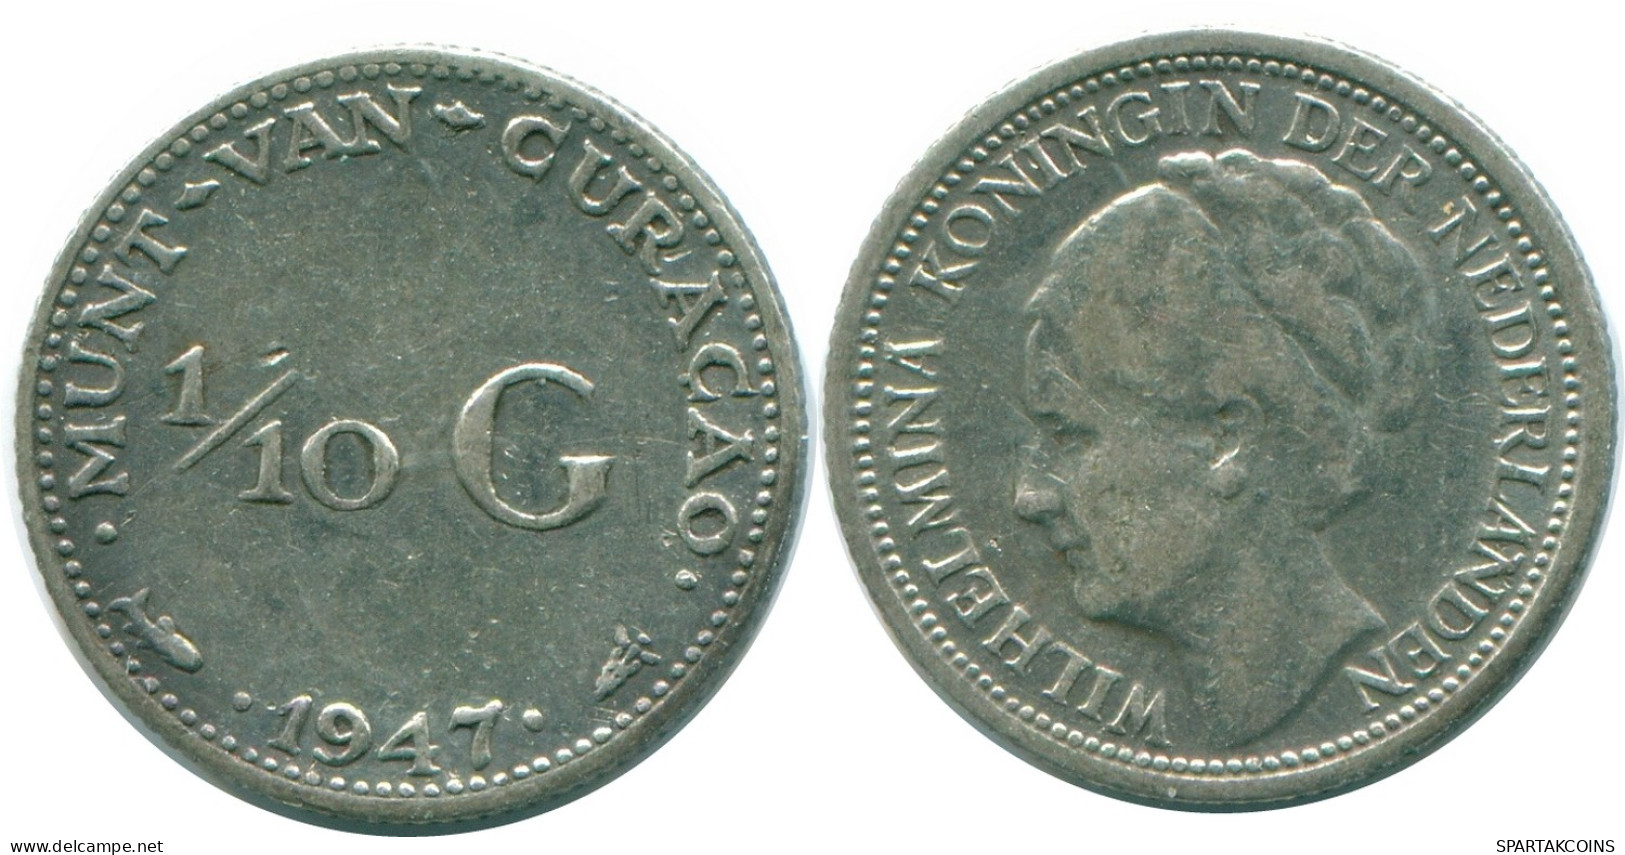 1/10 GULDEN 1947 CURACAO Netherlands SILVER Colonial Coin #NL11848.3.U - Curaçao